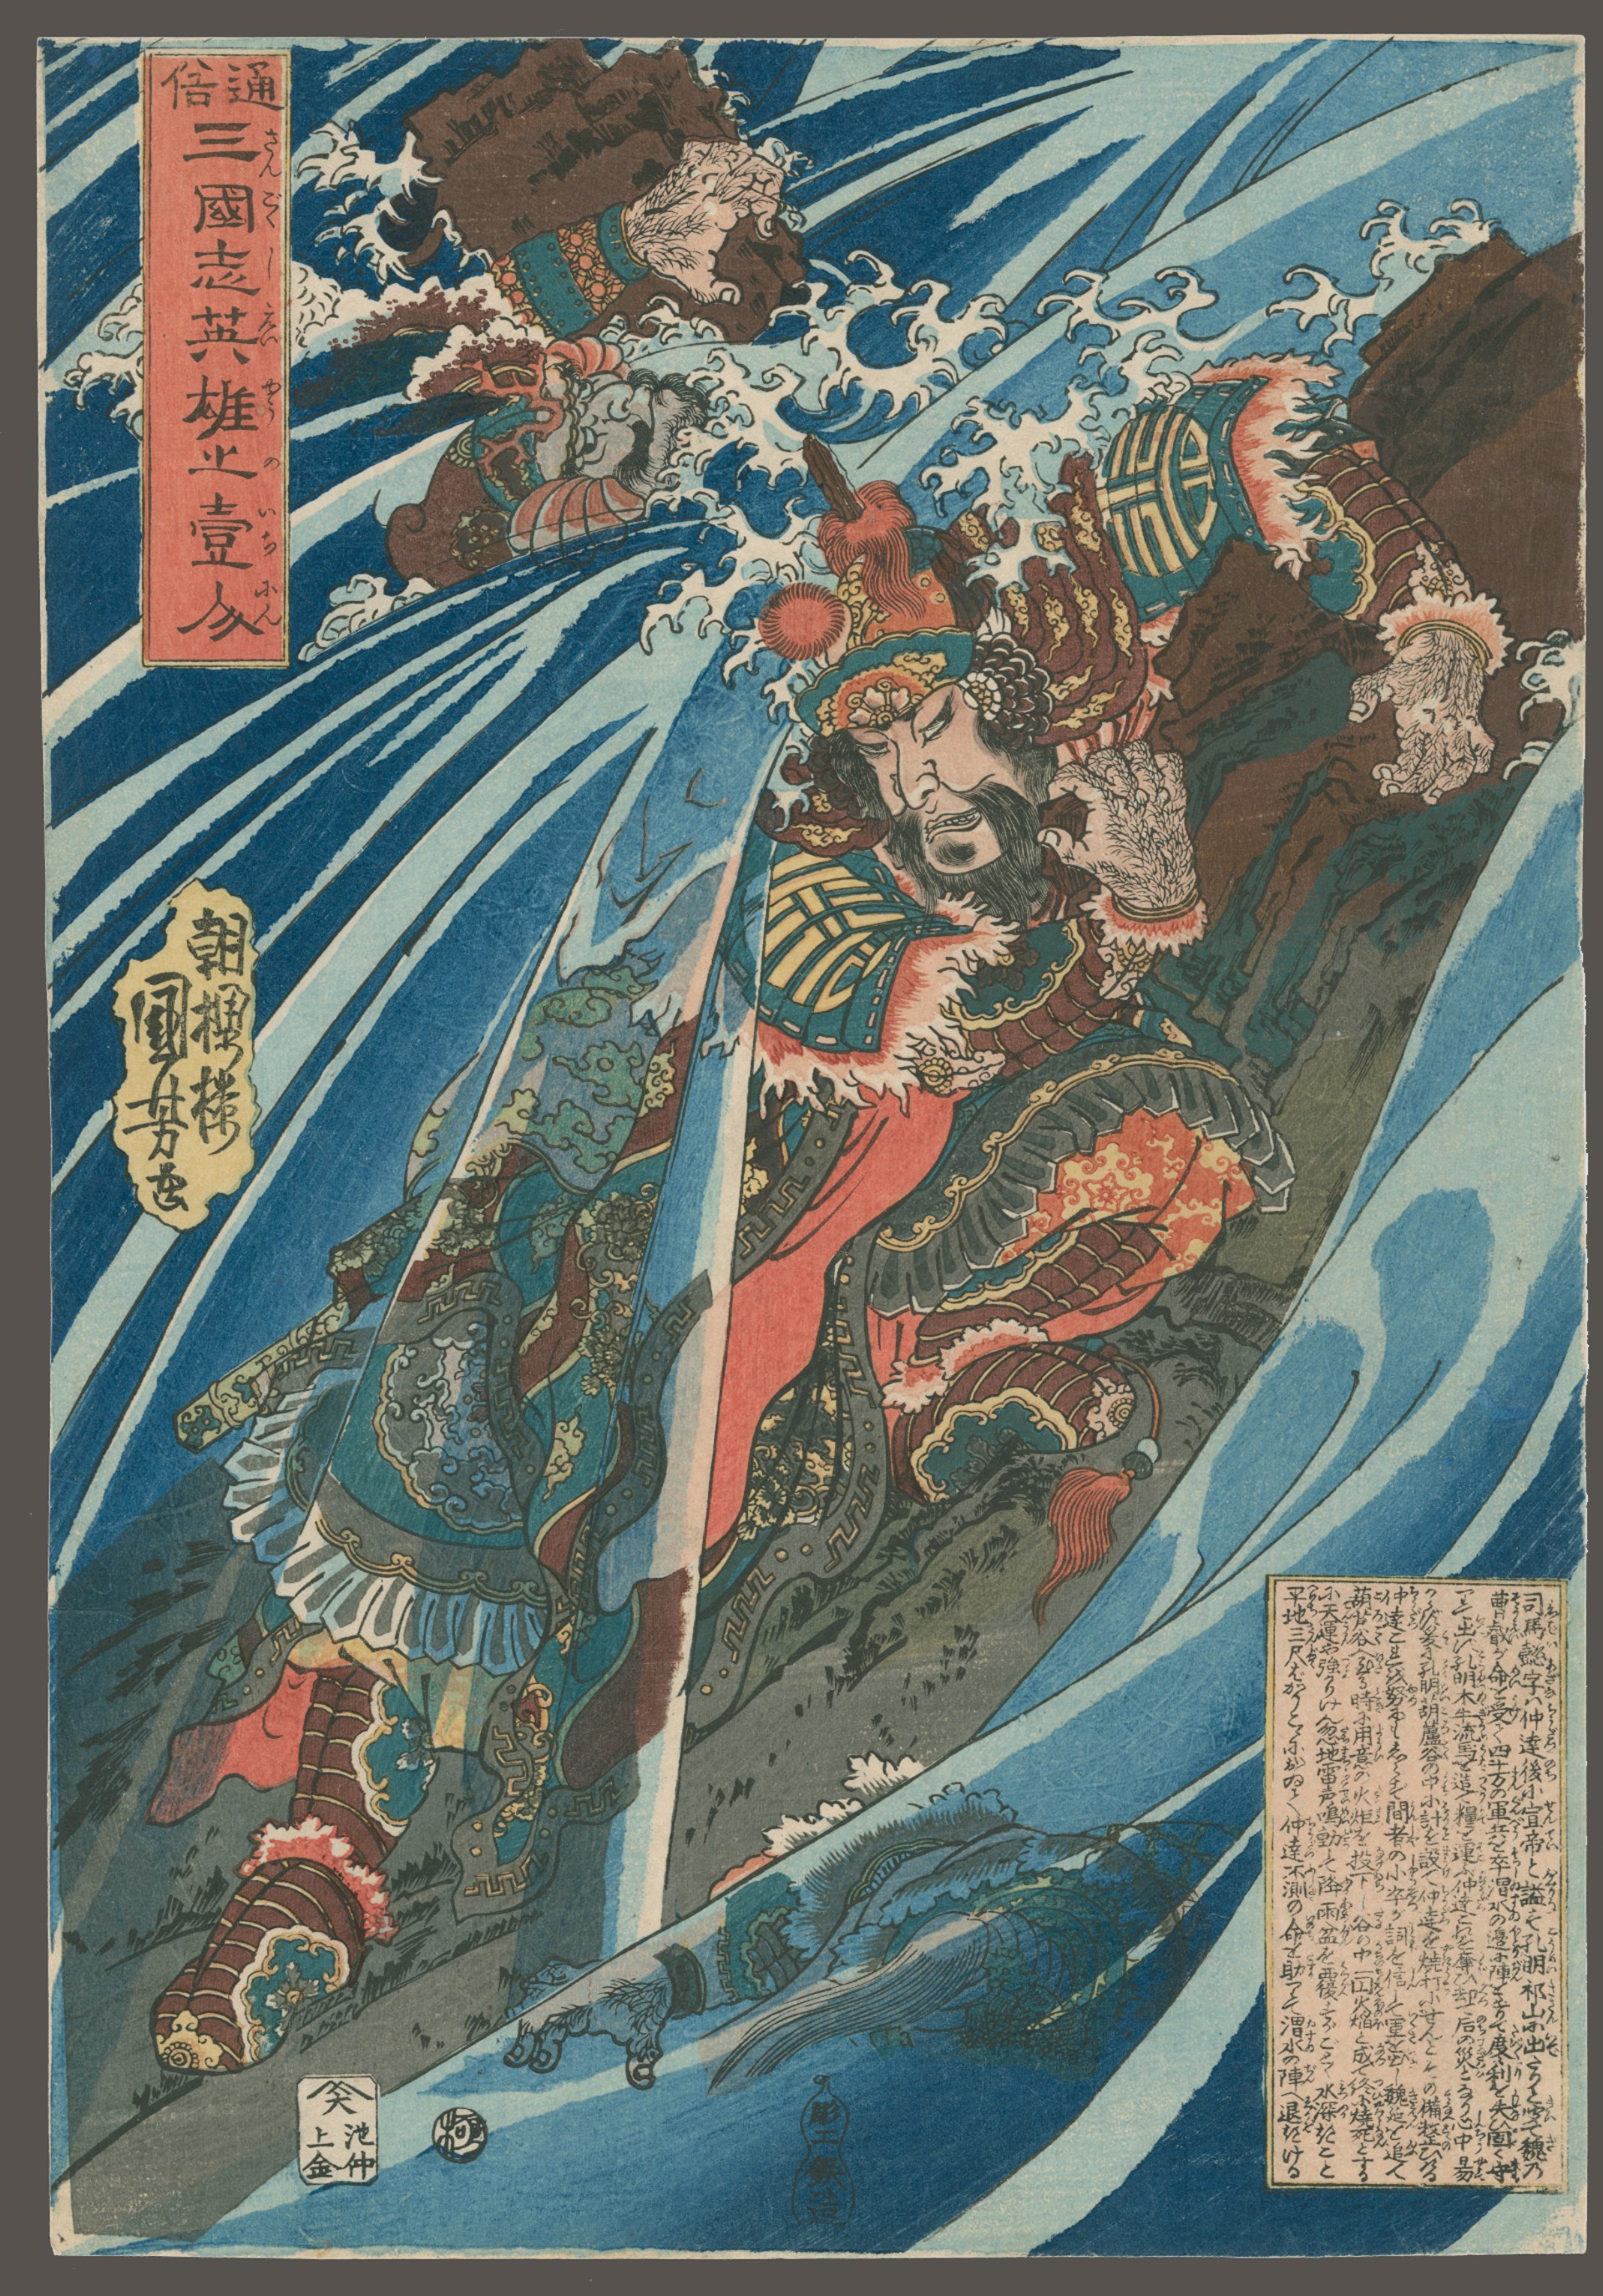 Shinwa-yi Heroes of the Popular History of the Three Kingdoms, one by One by Kuniyoshi